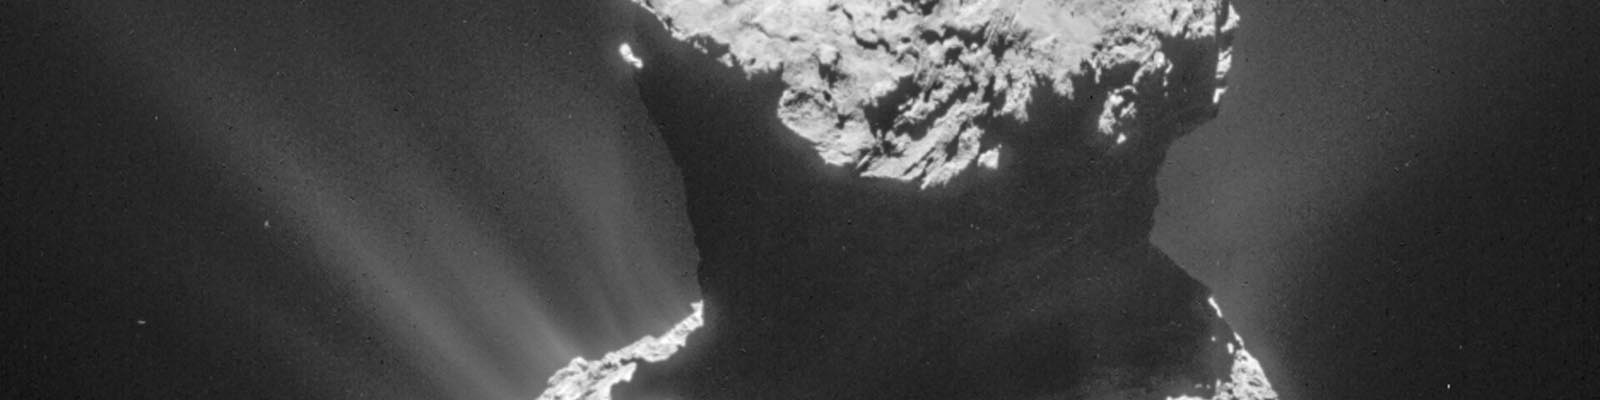 Vue de l'activité sur la comète 67P/Churyumov-Gerasimenko